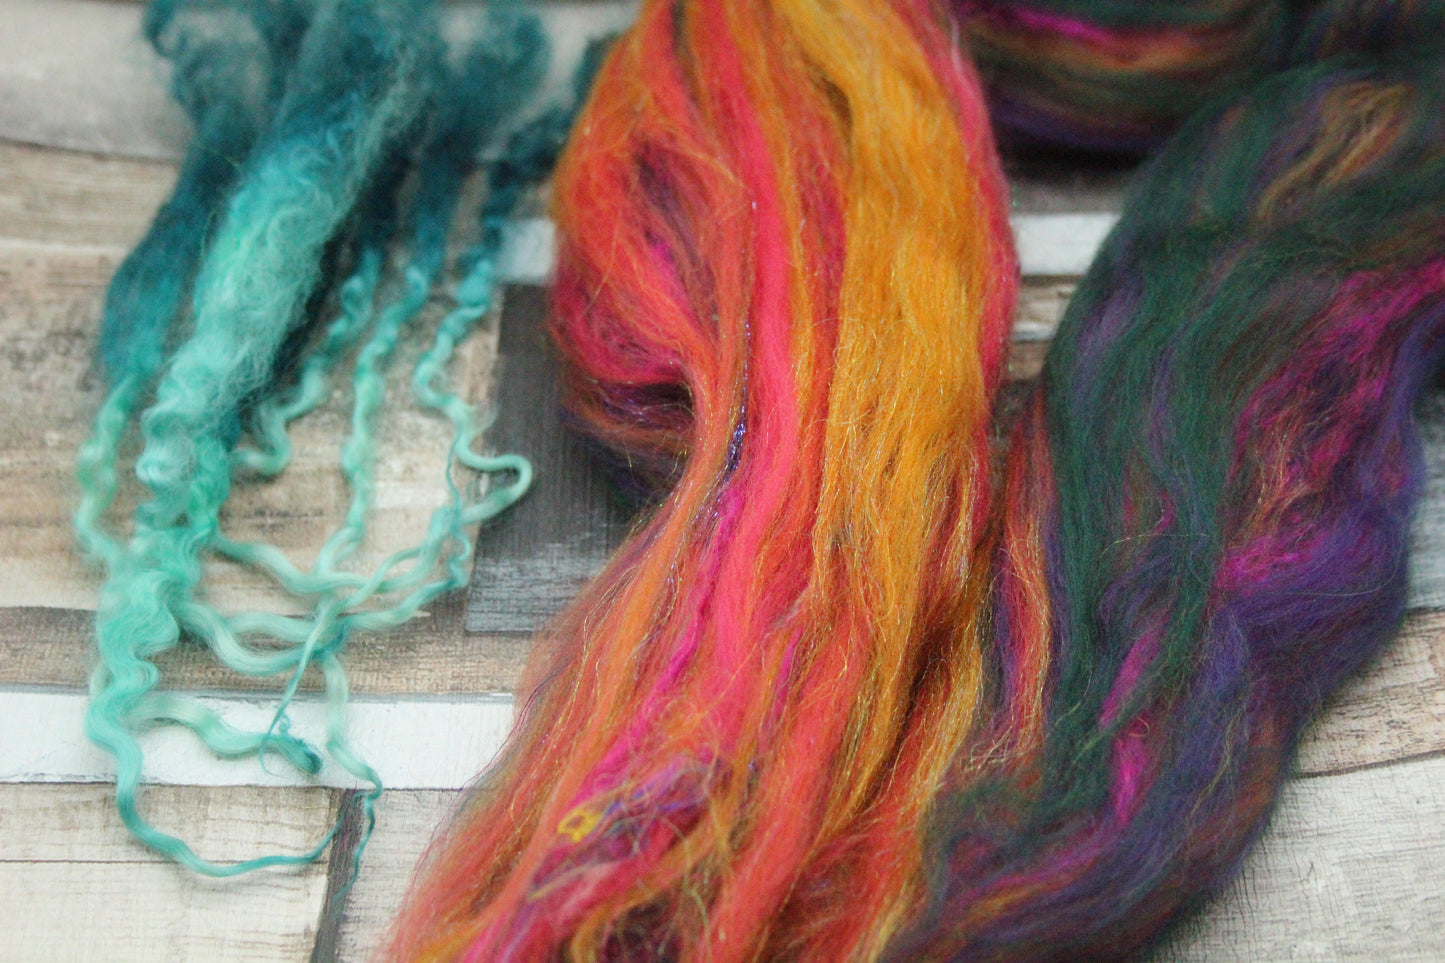 Merino Wool Blend - Green Orange Pink - 16 grams / 0.5 oz  - Fibre for felting, weaving or spinning